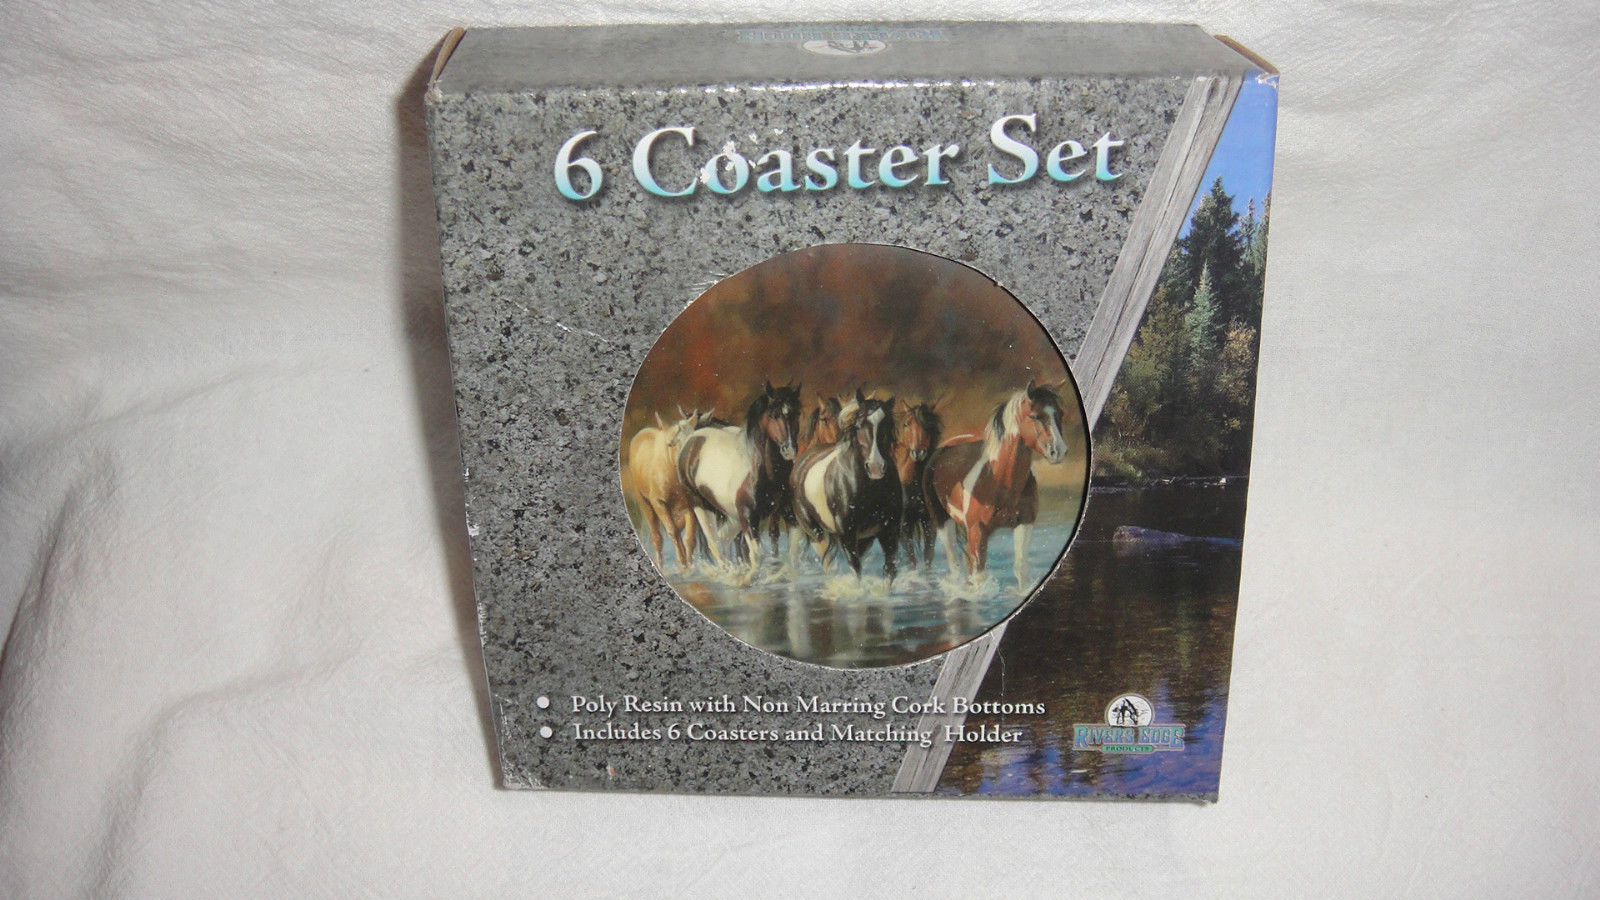 Beautiful Running Horses coaster set by Rivers Edge - $14.65